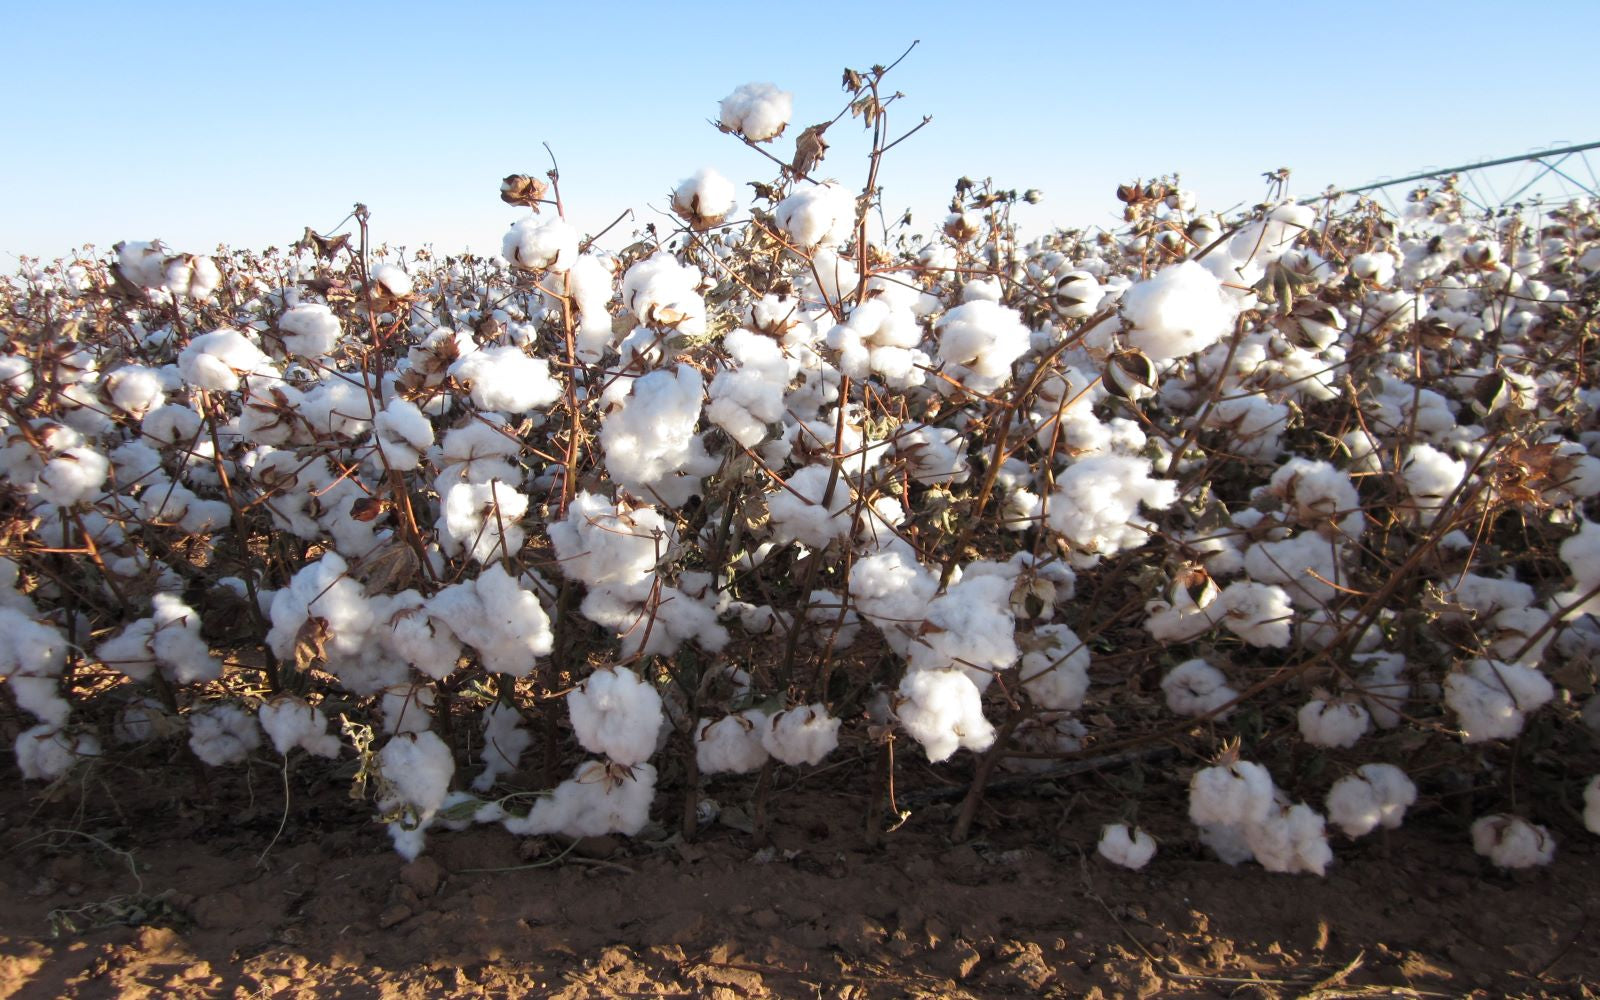 West Texas cotton field.